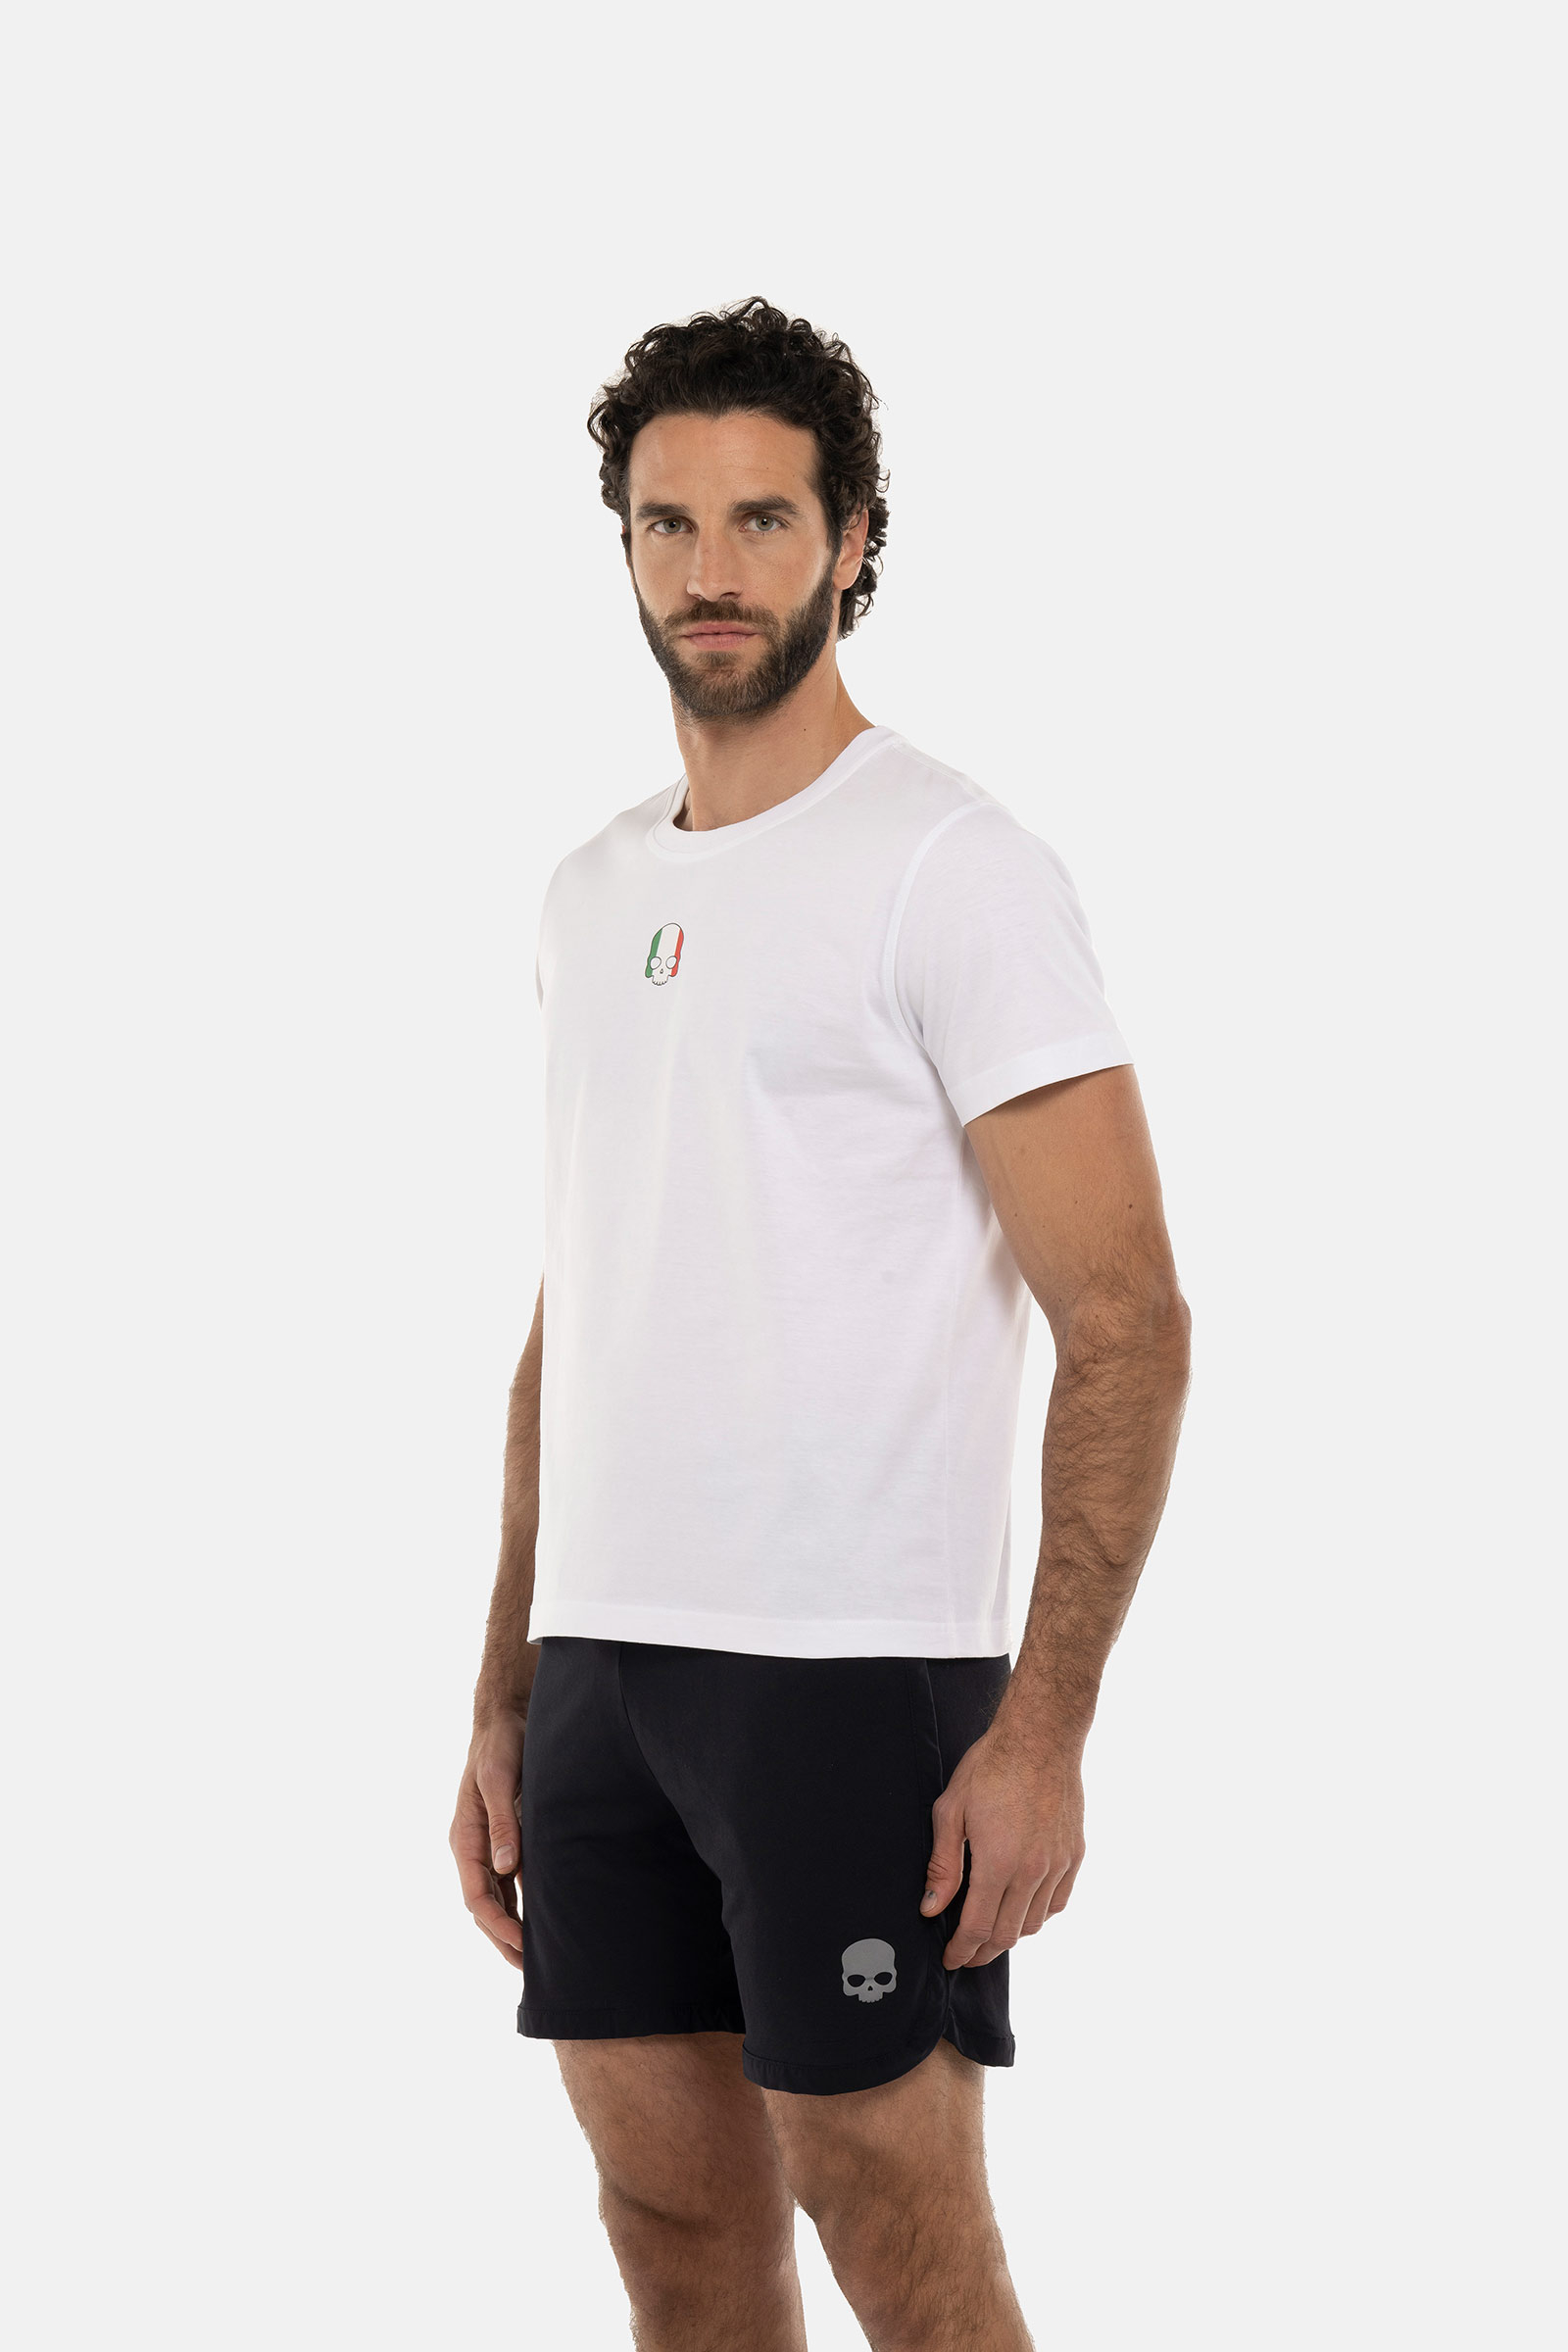 T-SHIRT MATCH - WHITE - Abbigliamento sportivo | Hydrogen